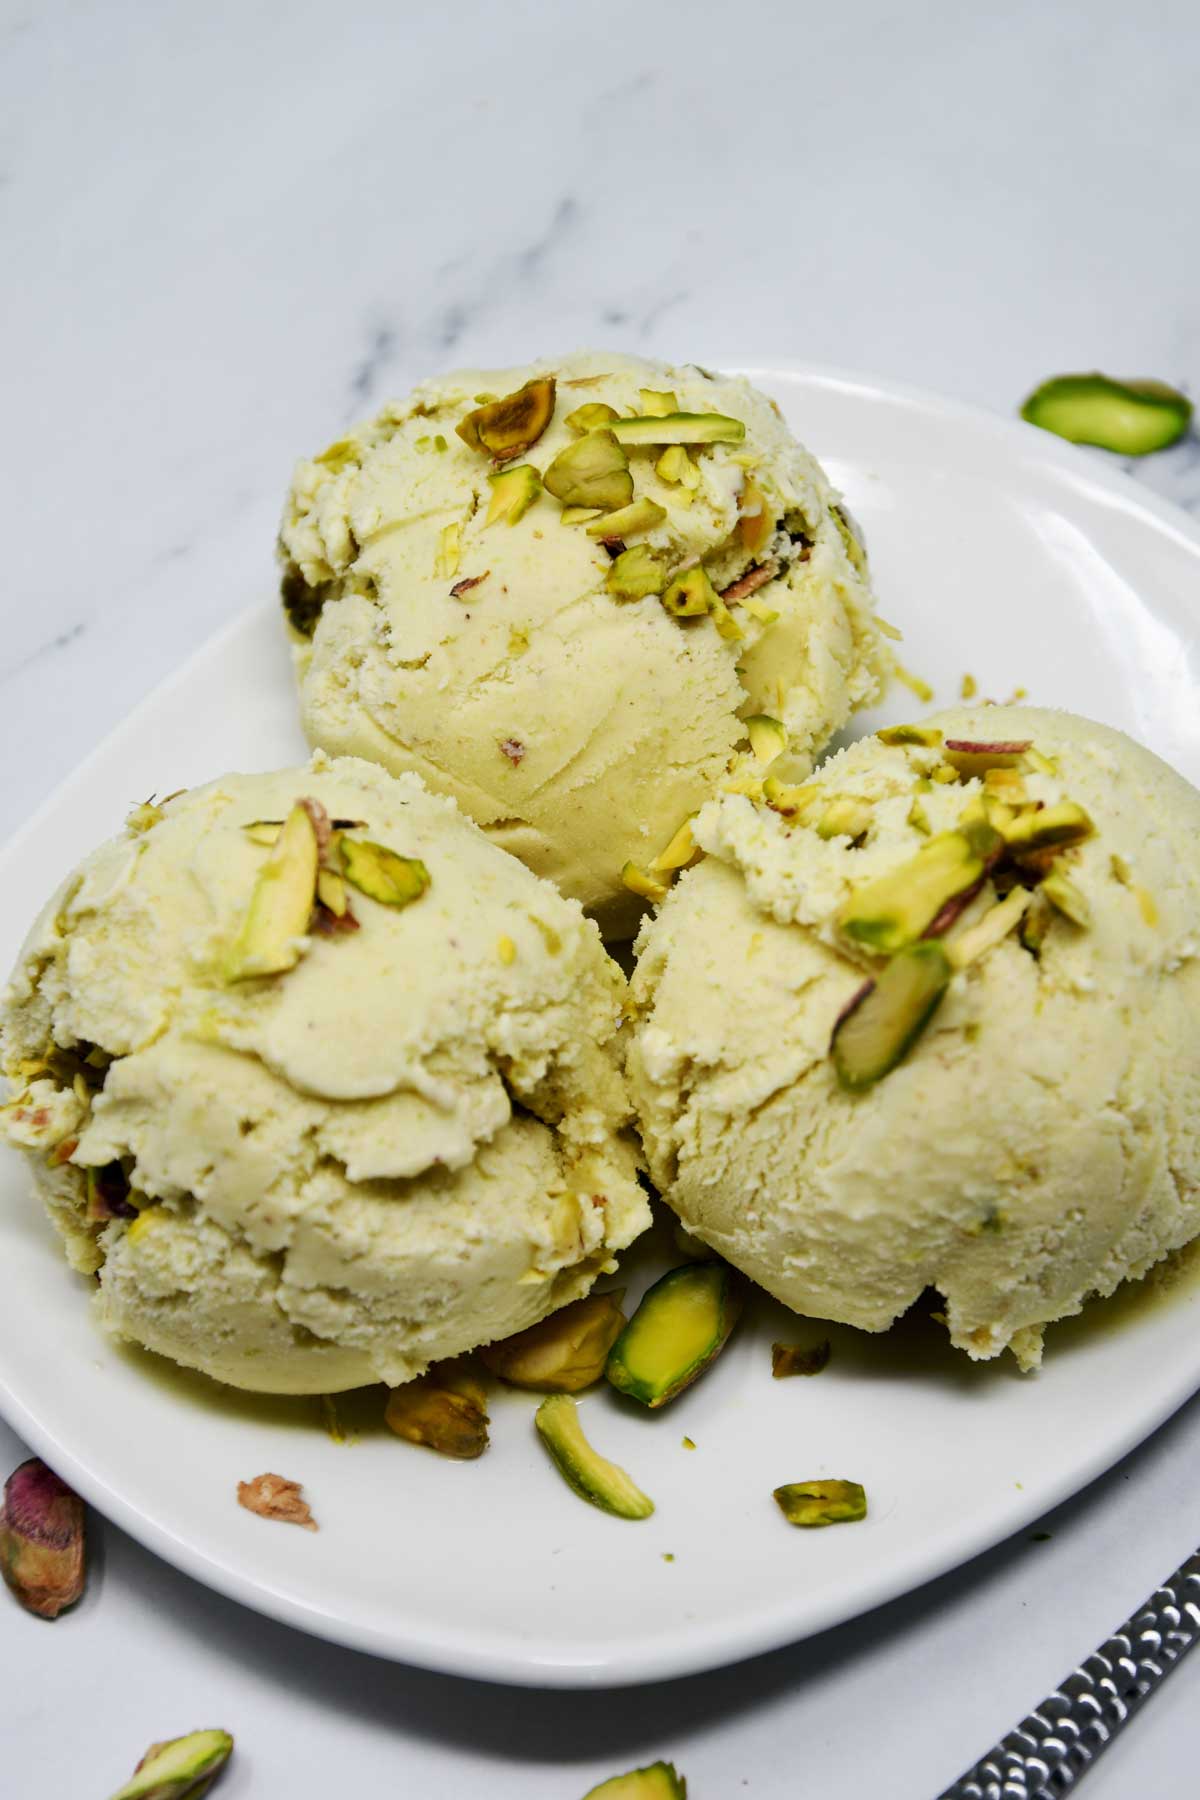 Pistachio ice cream scoops in a plate.